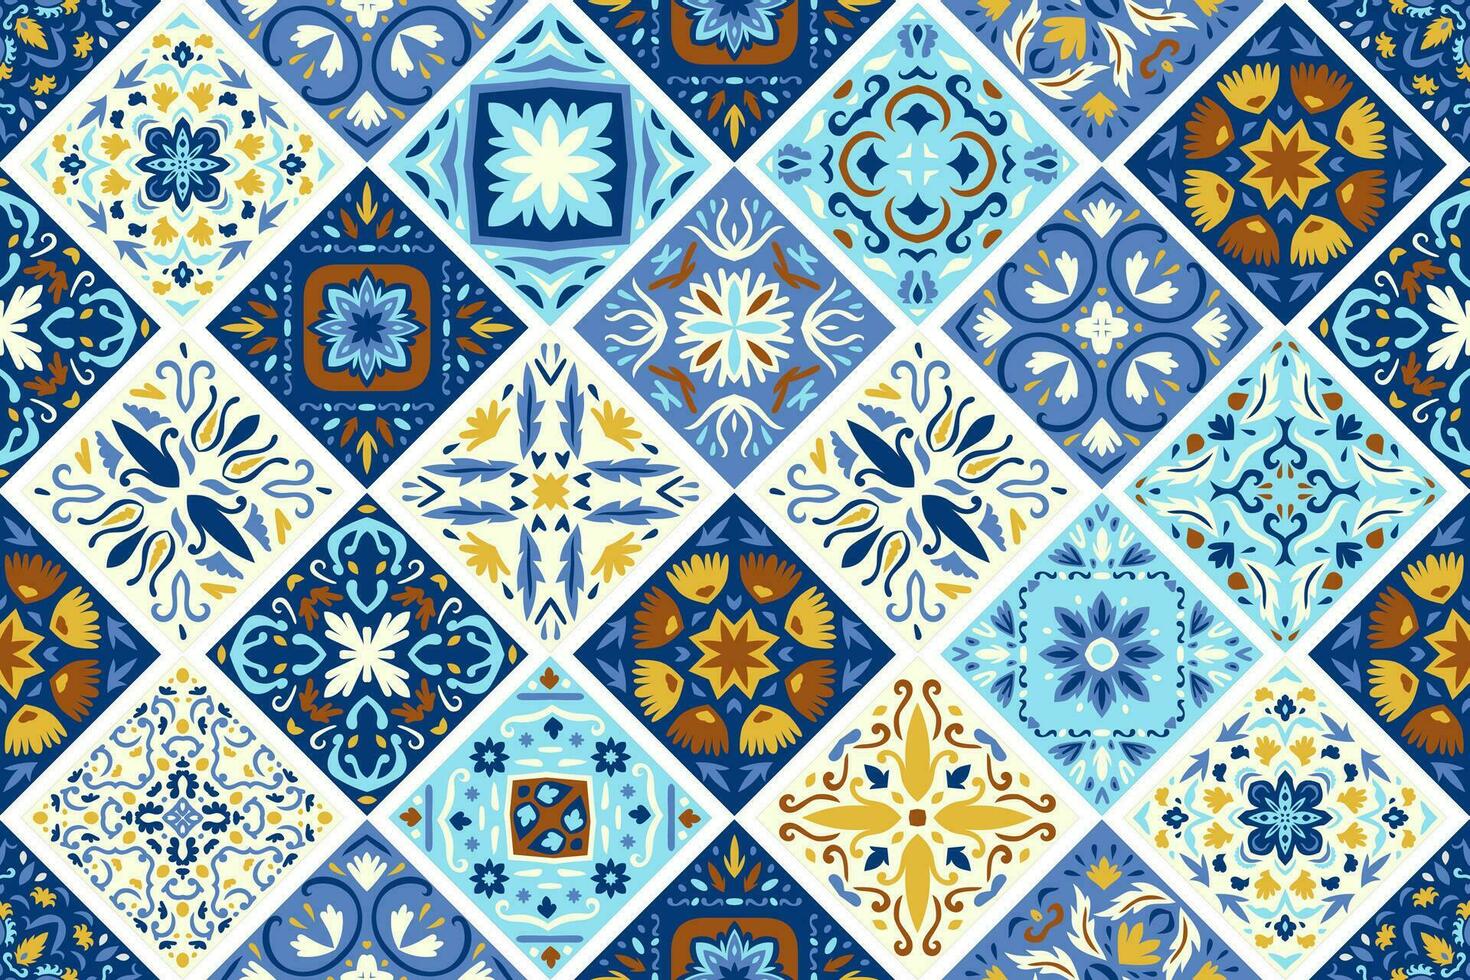 conjunto do estampado azulejo chão azulejos fundo. desatado colorida padronizar vetor